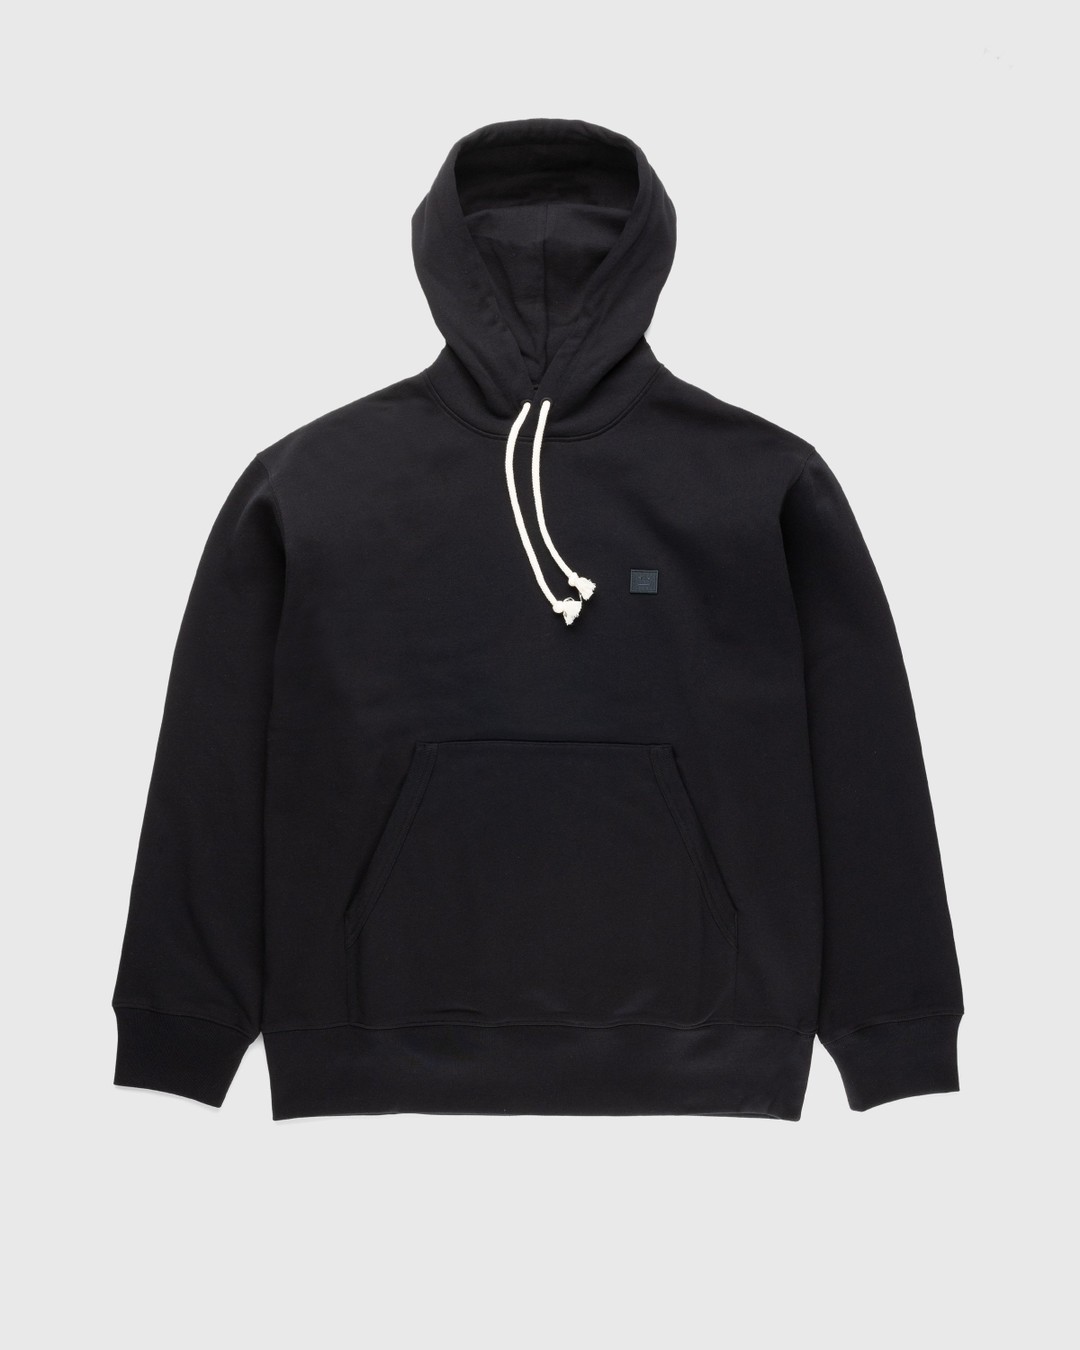 Acne Studios – Organic Cotton Hooded Sweatshirt Black - Hoodies - Black - Image 1